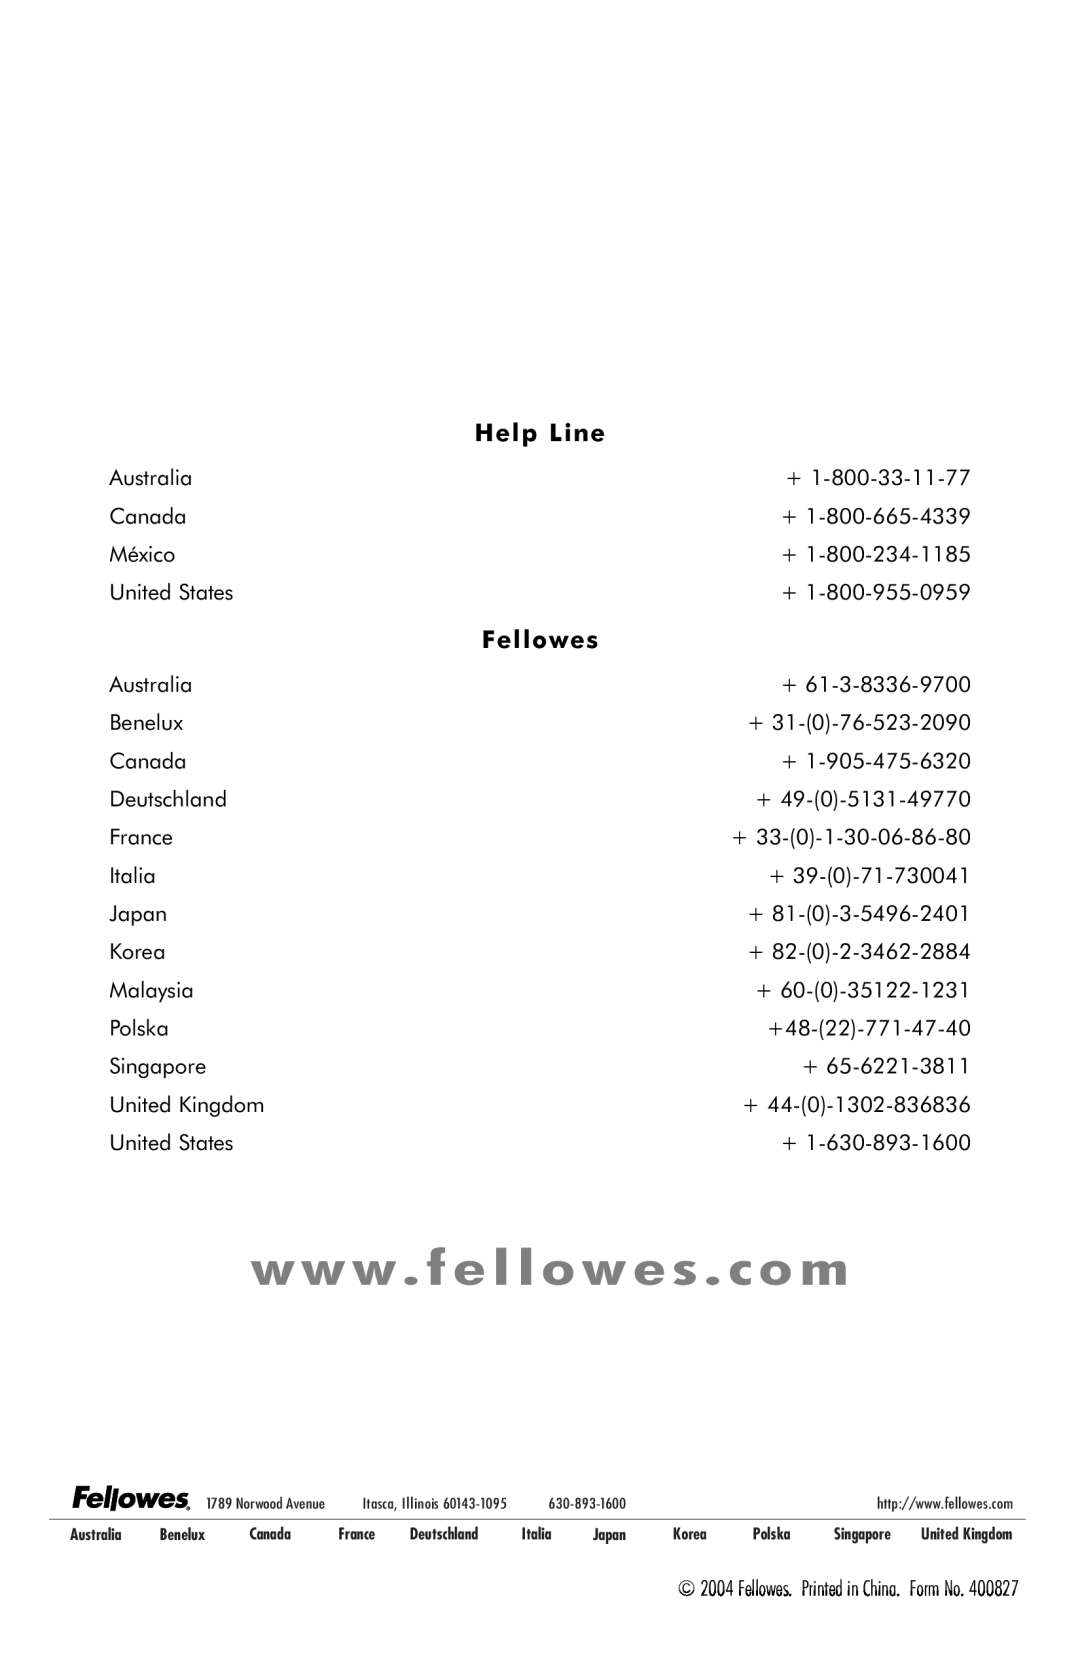 Fellowes T580C manual Help Line, Fellowes, w w w . f e l l o w e s . c o m 